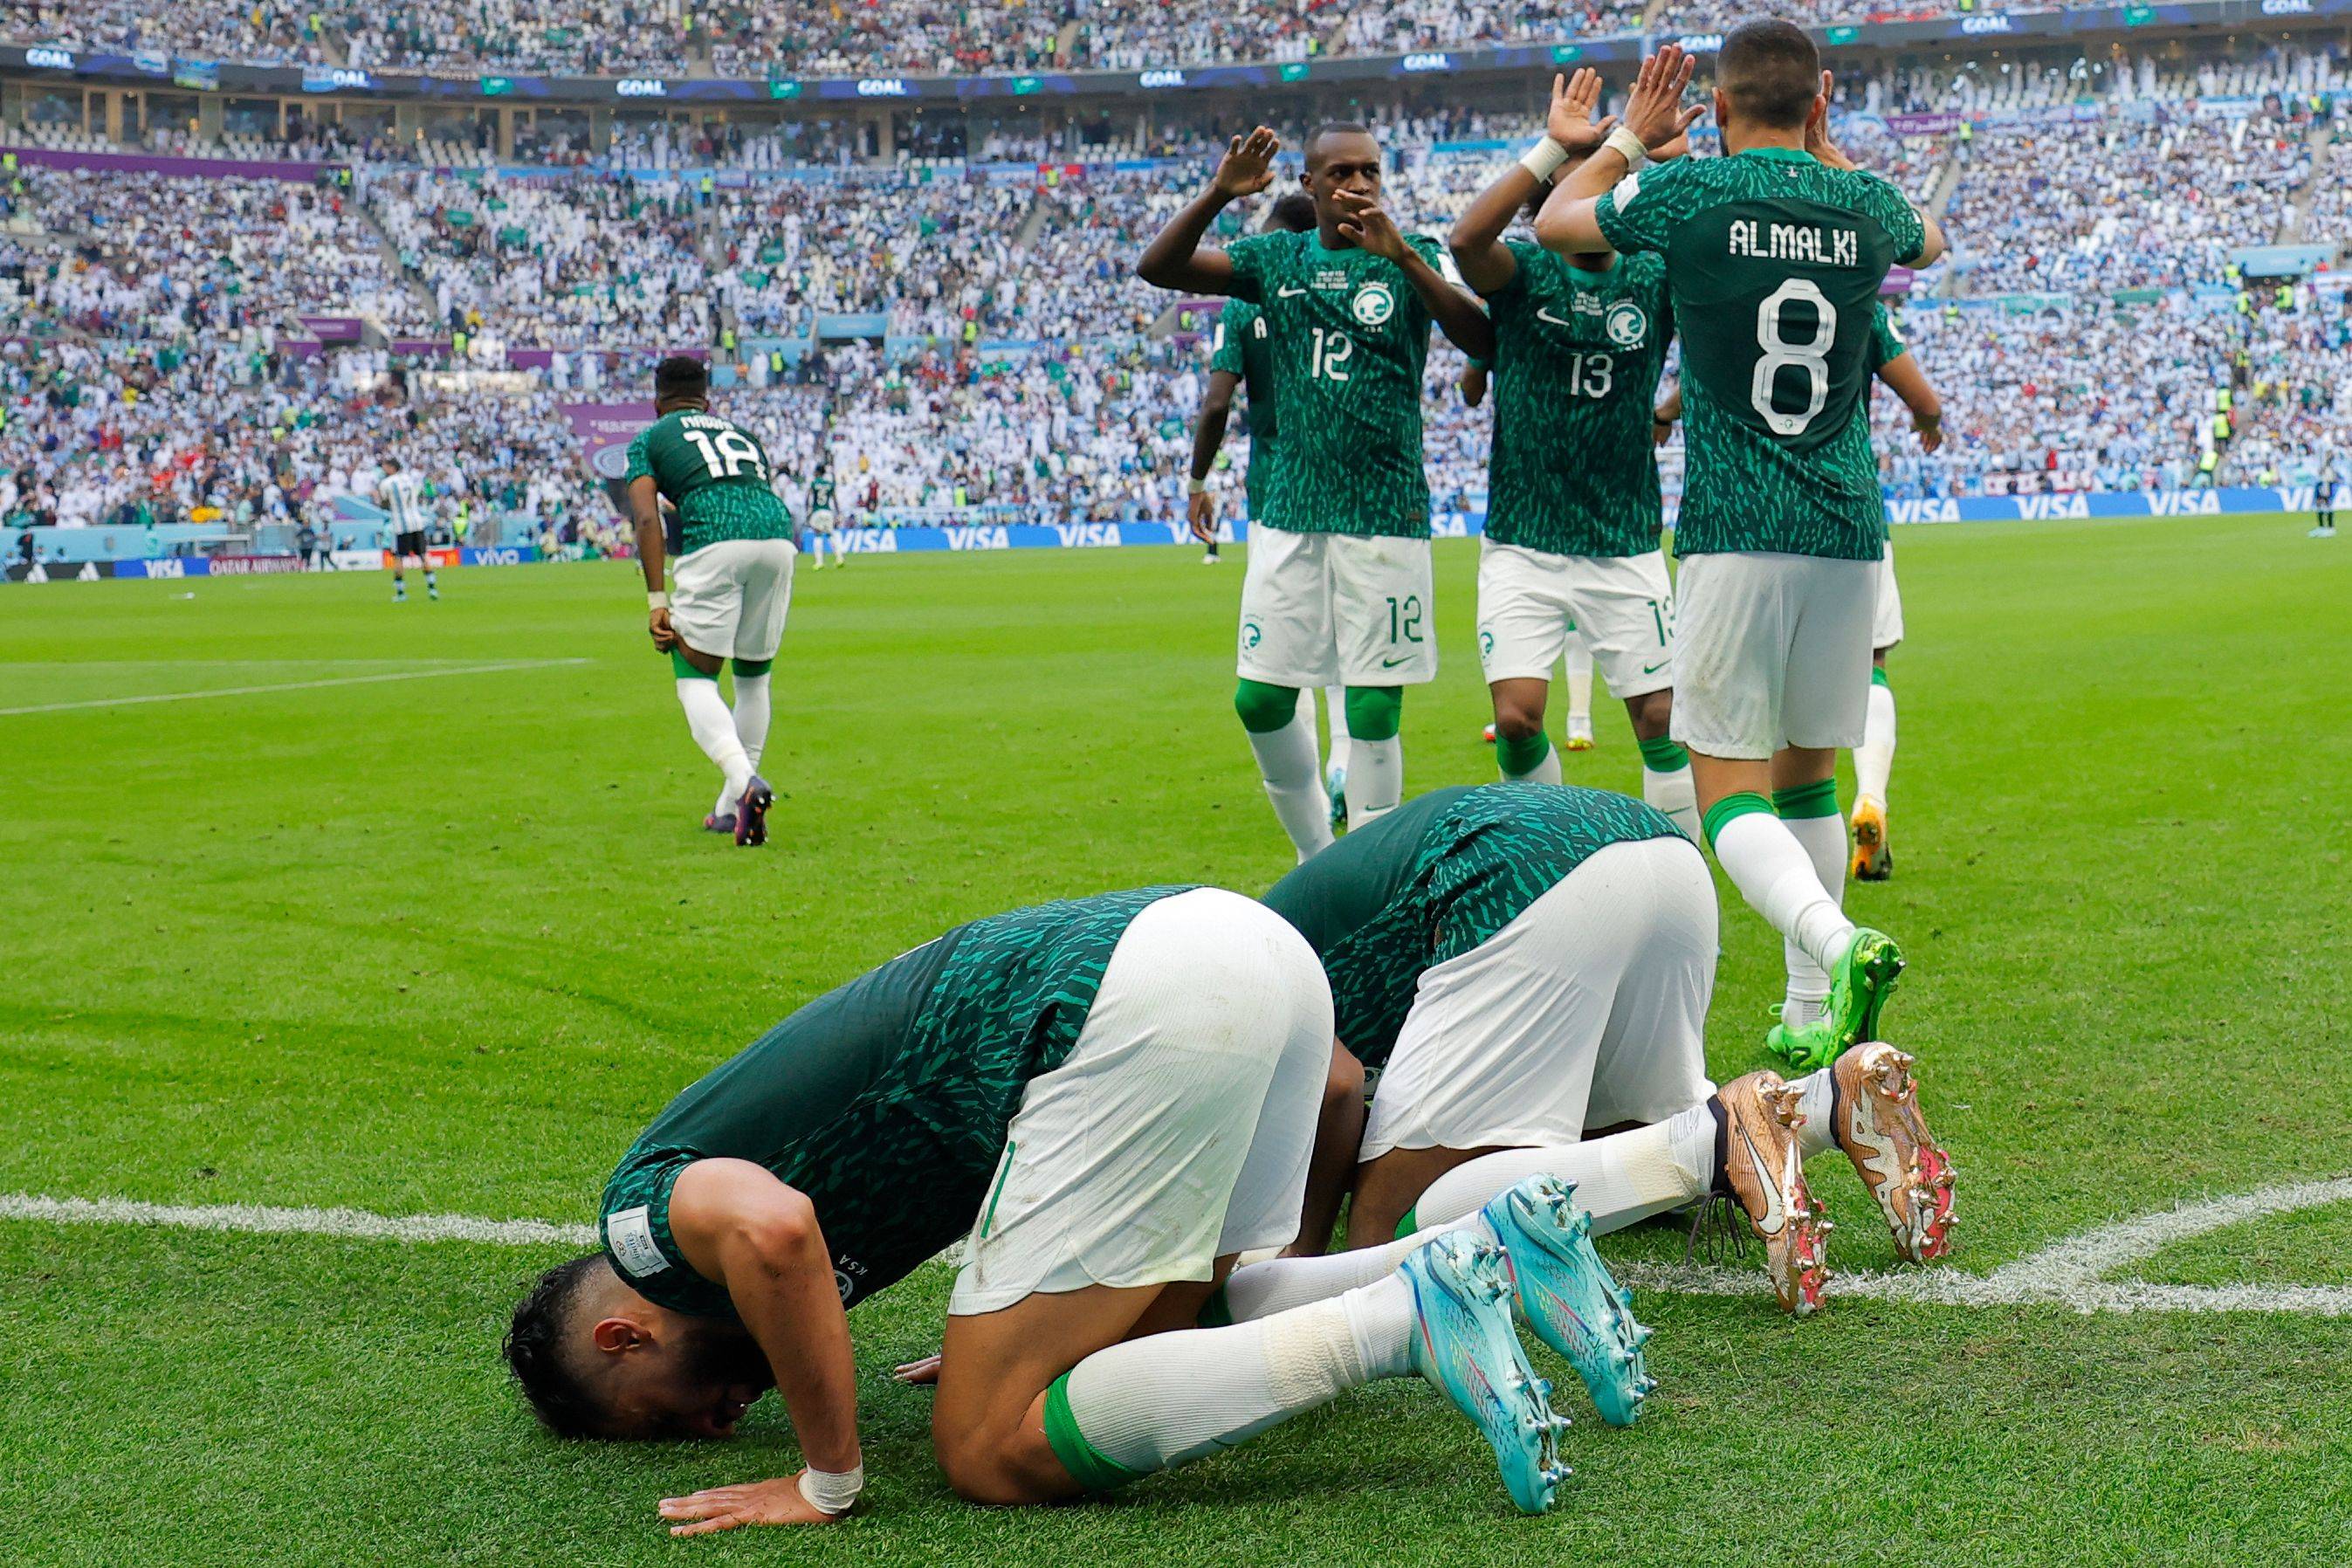 Saudi Arabia celebrates shock defeat of World Cup favorite Argentina